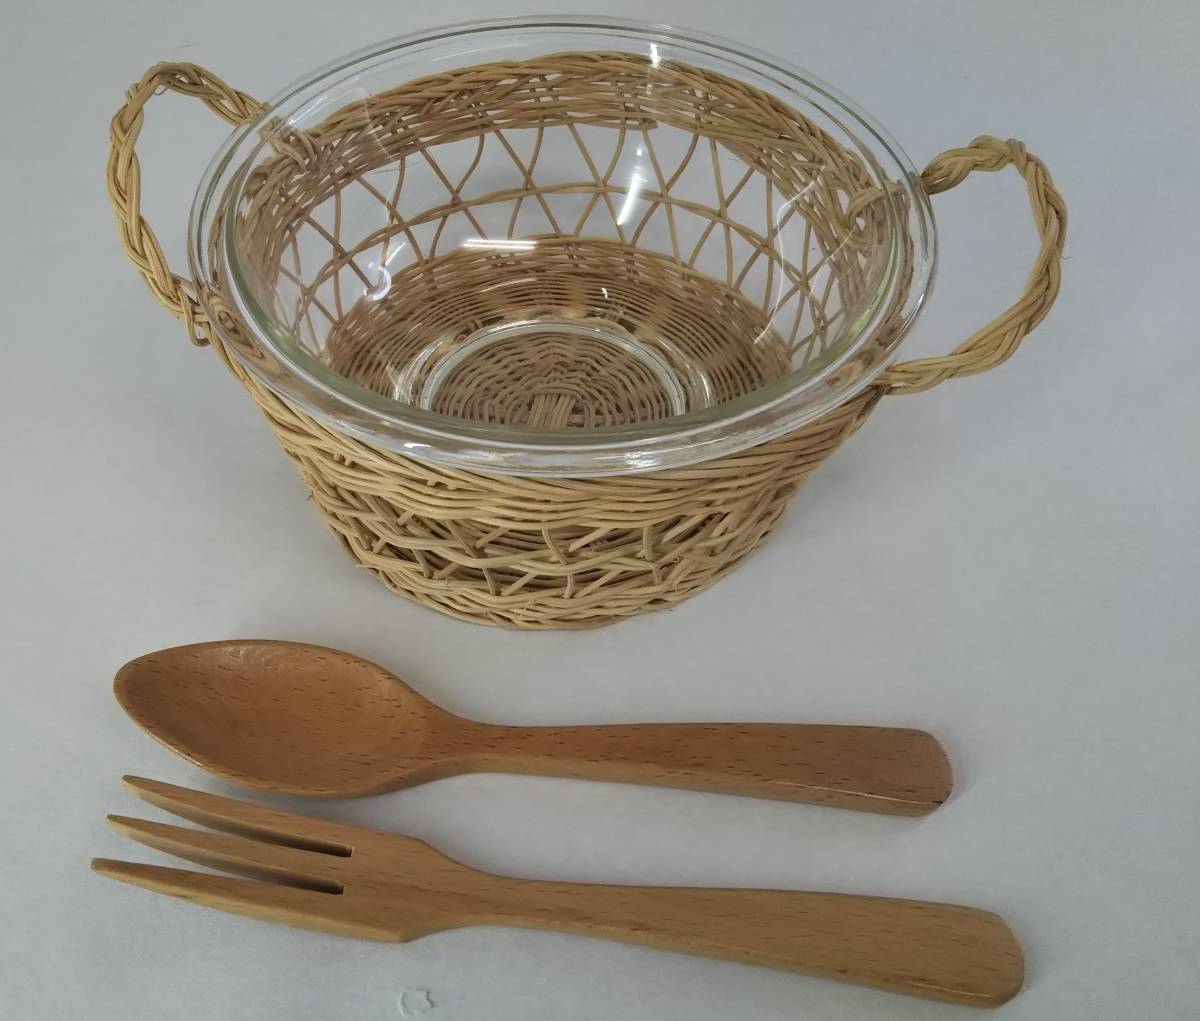 D851) rock castle glass salad bowl 1 point rock castle glass bowl basket basket tableware Pyrex wooden cutlery pyrex